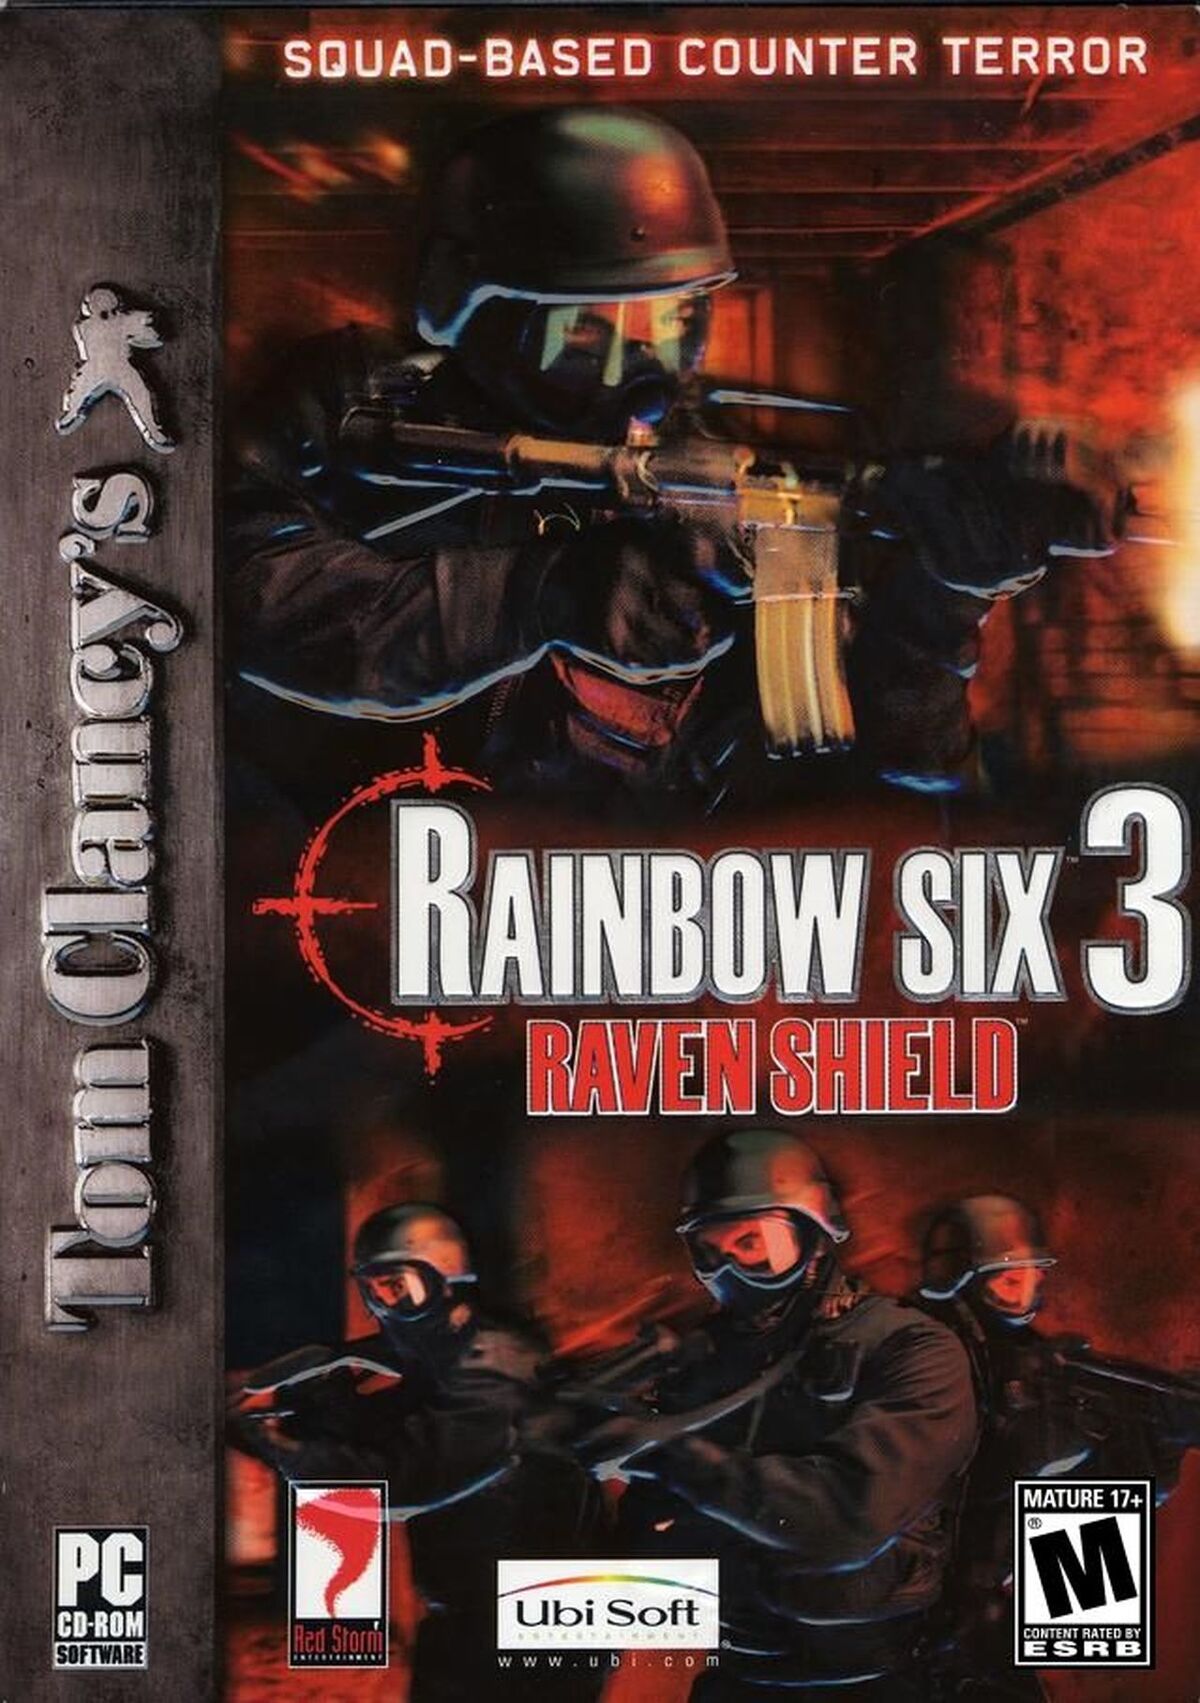 User blog:Awyman13/Rainbow Six Siege is Now on PlayStation Now